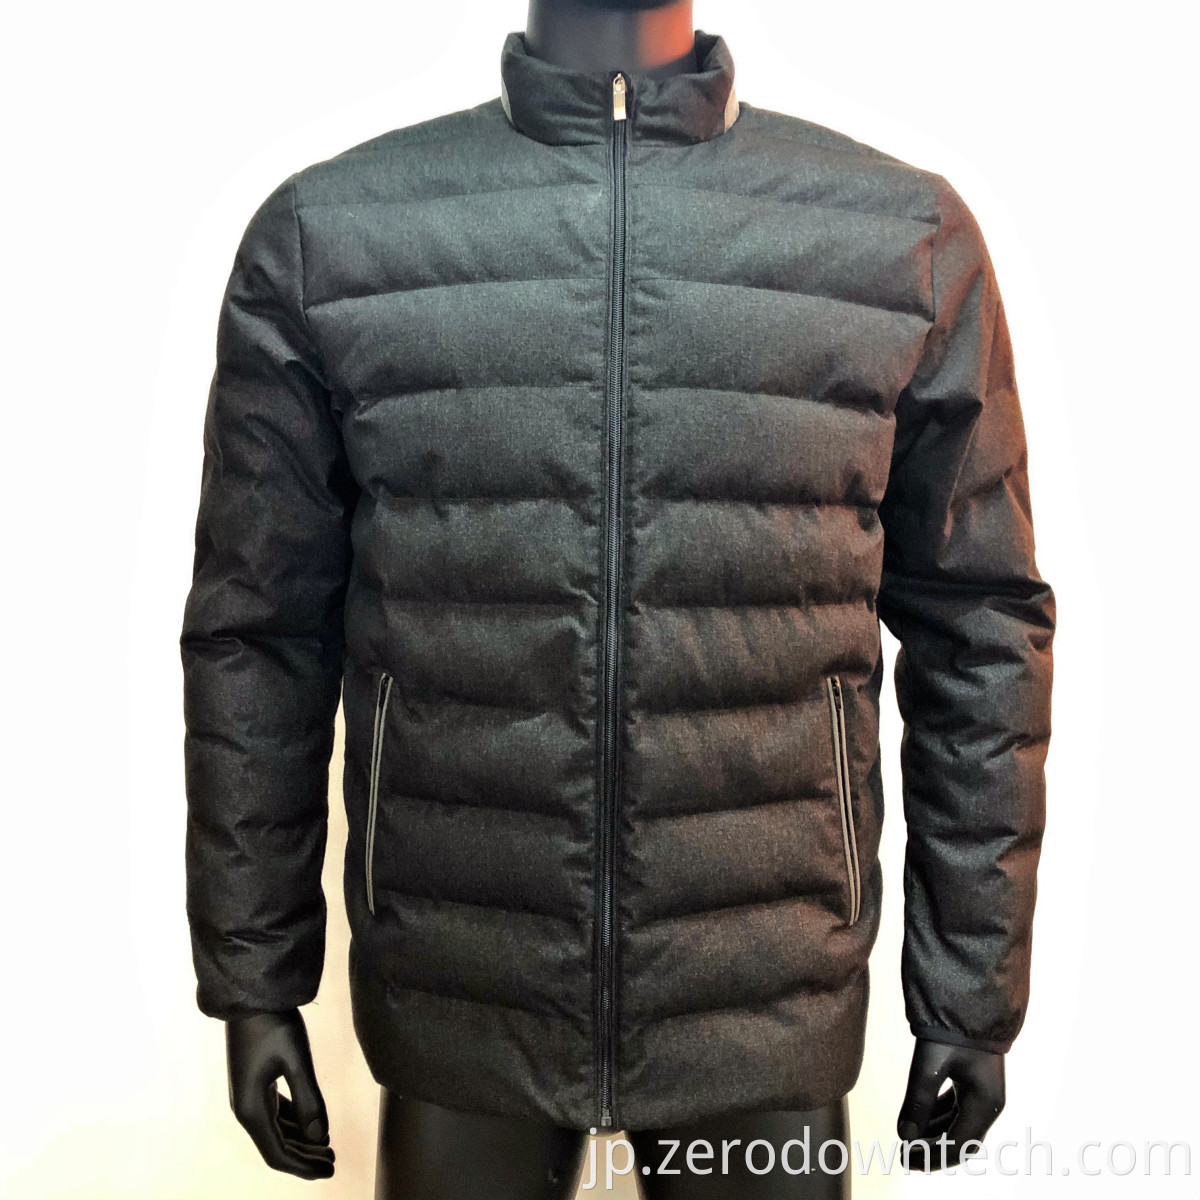 Windproof Winter Padding Jacket